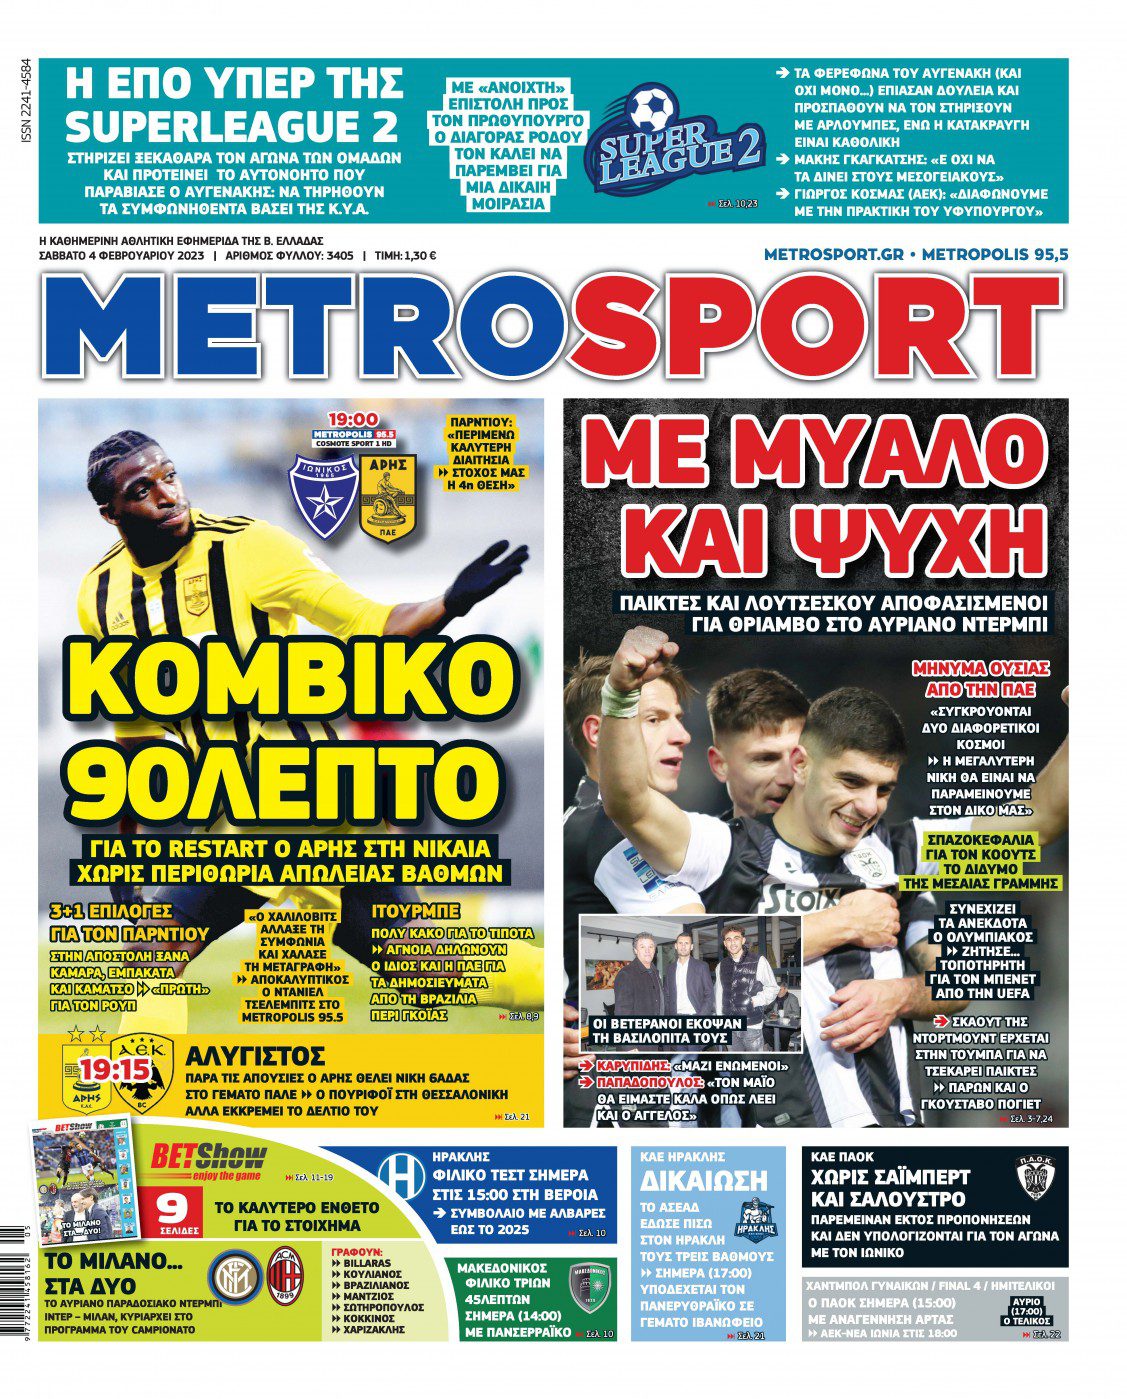 Metrosport 4.2